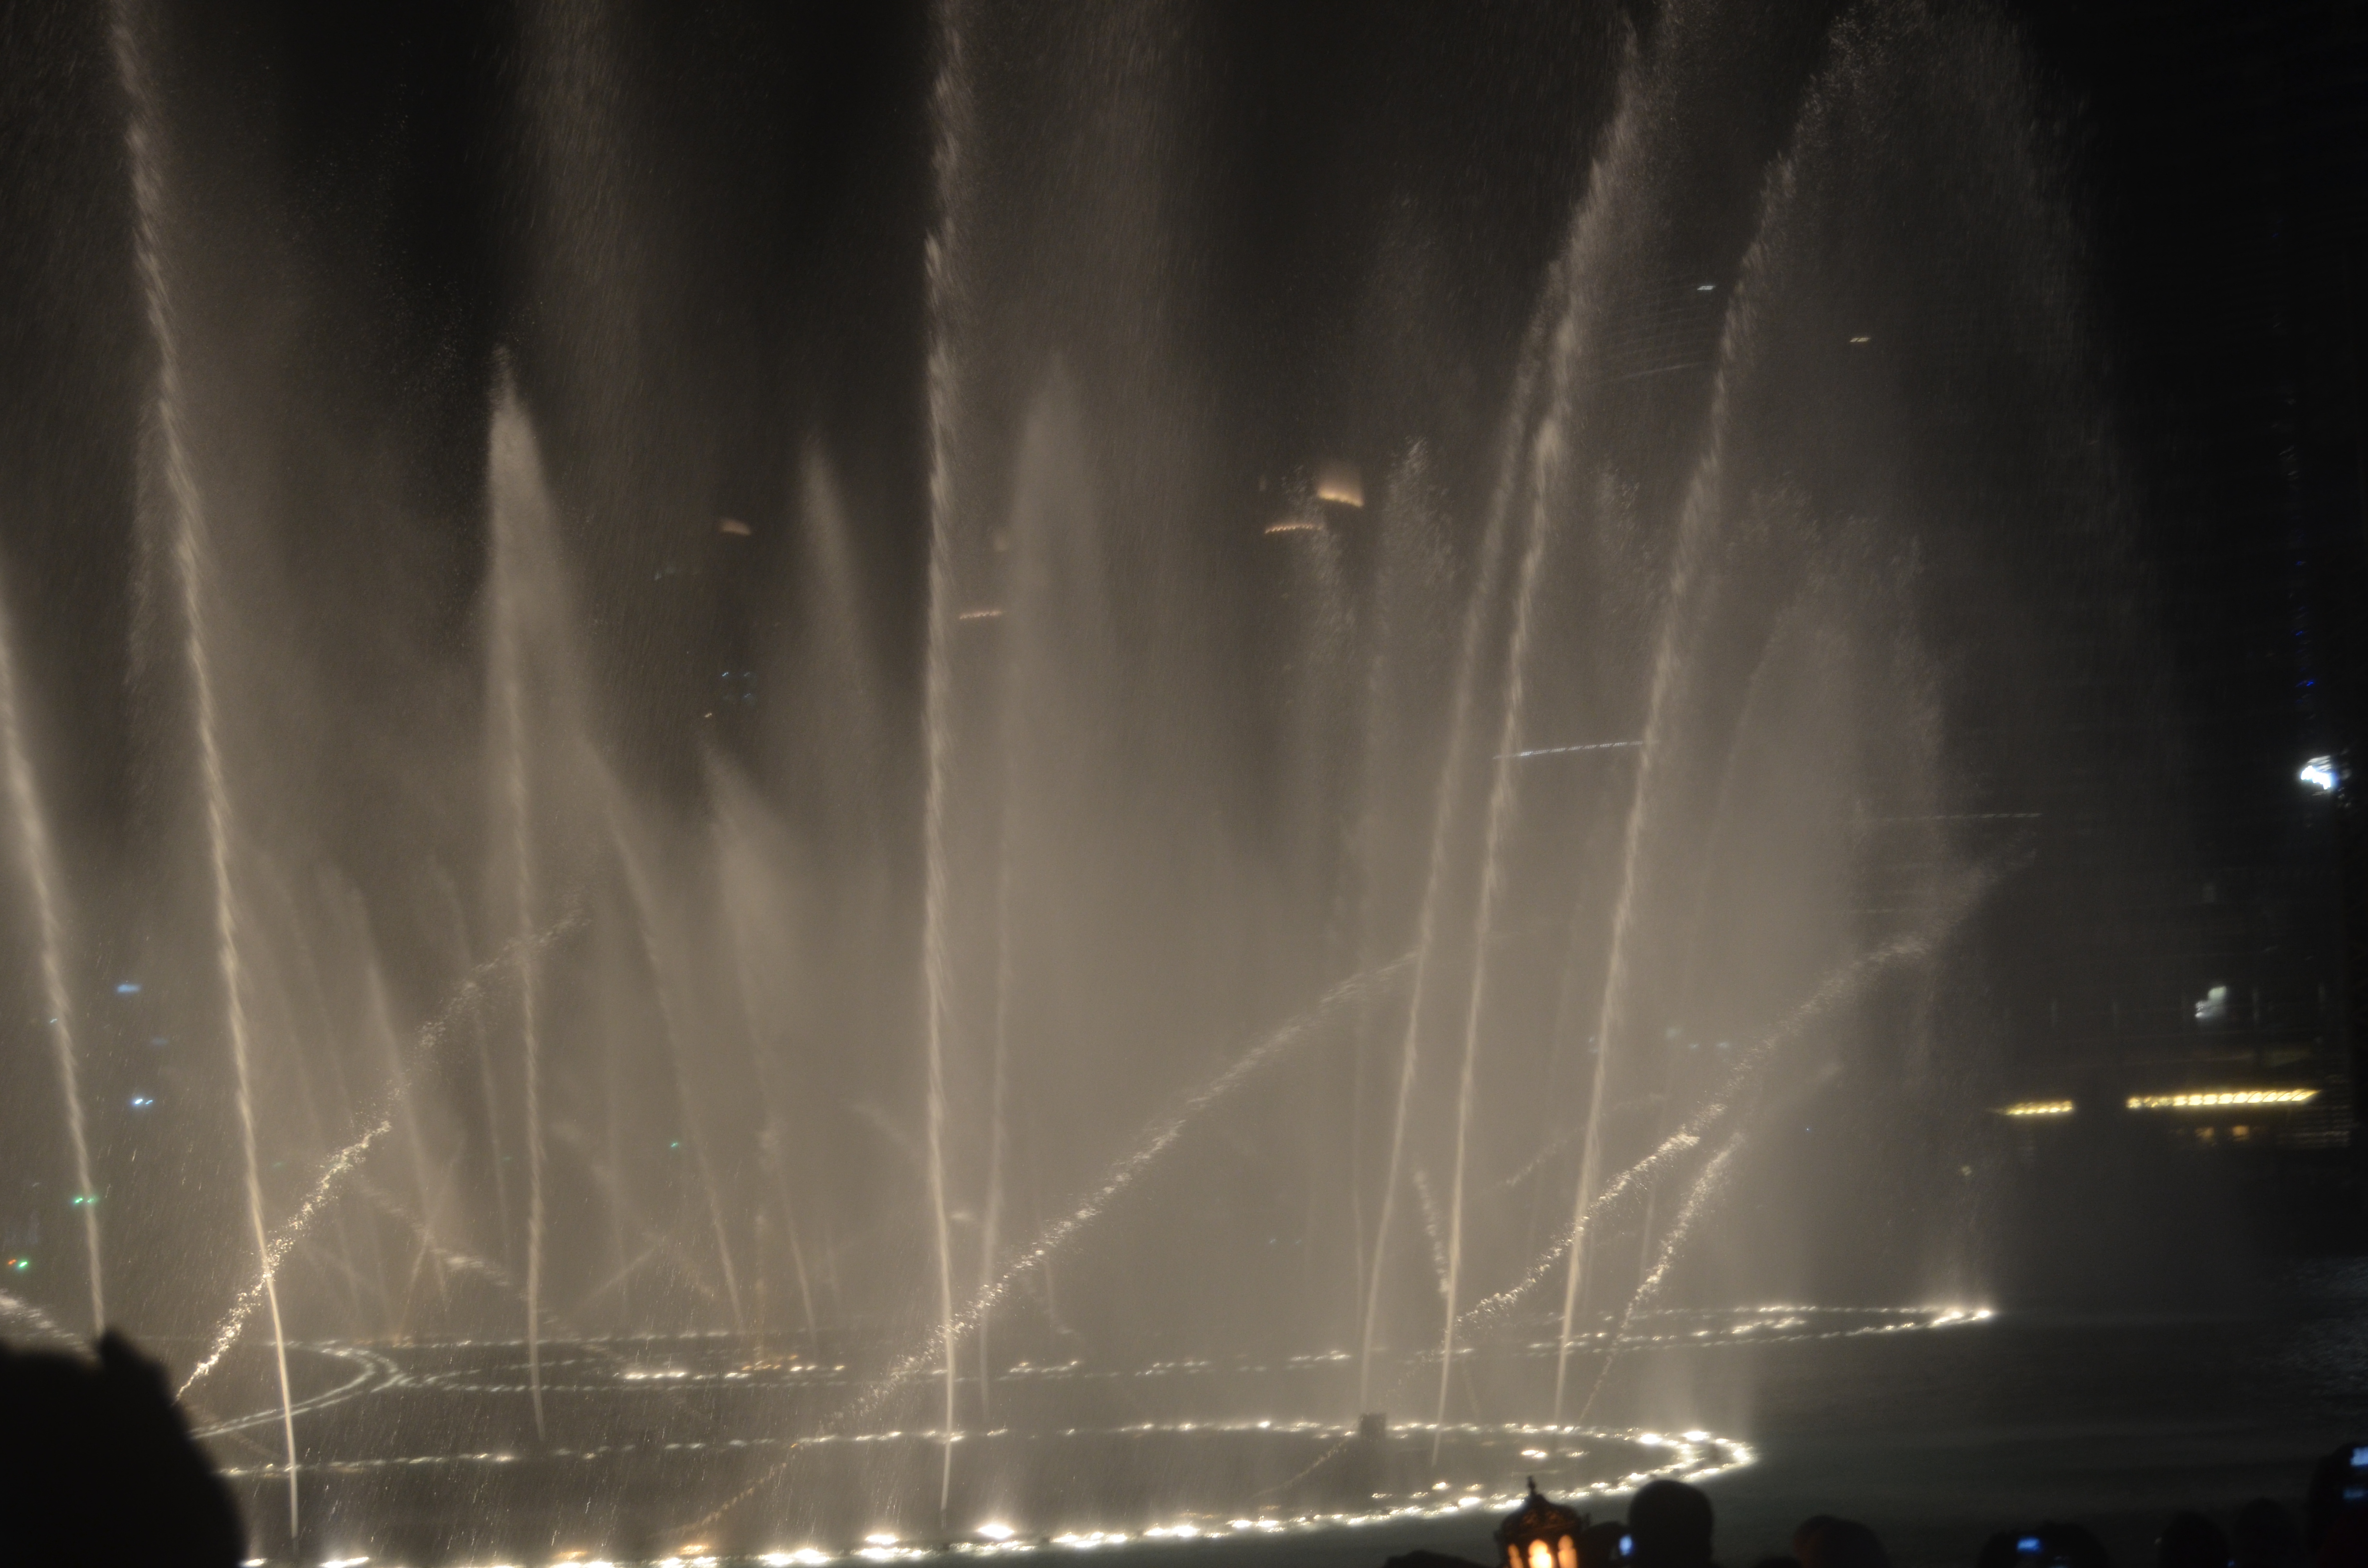 Dubai Fountains 